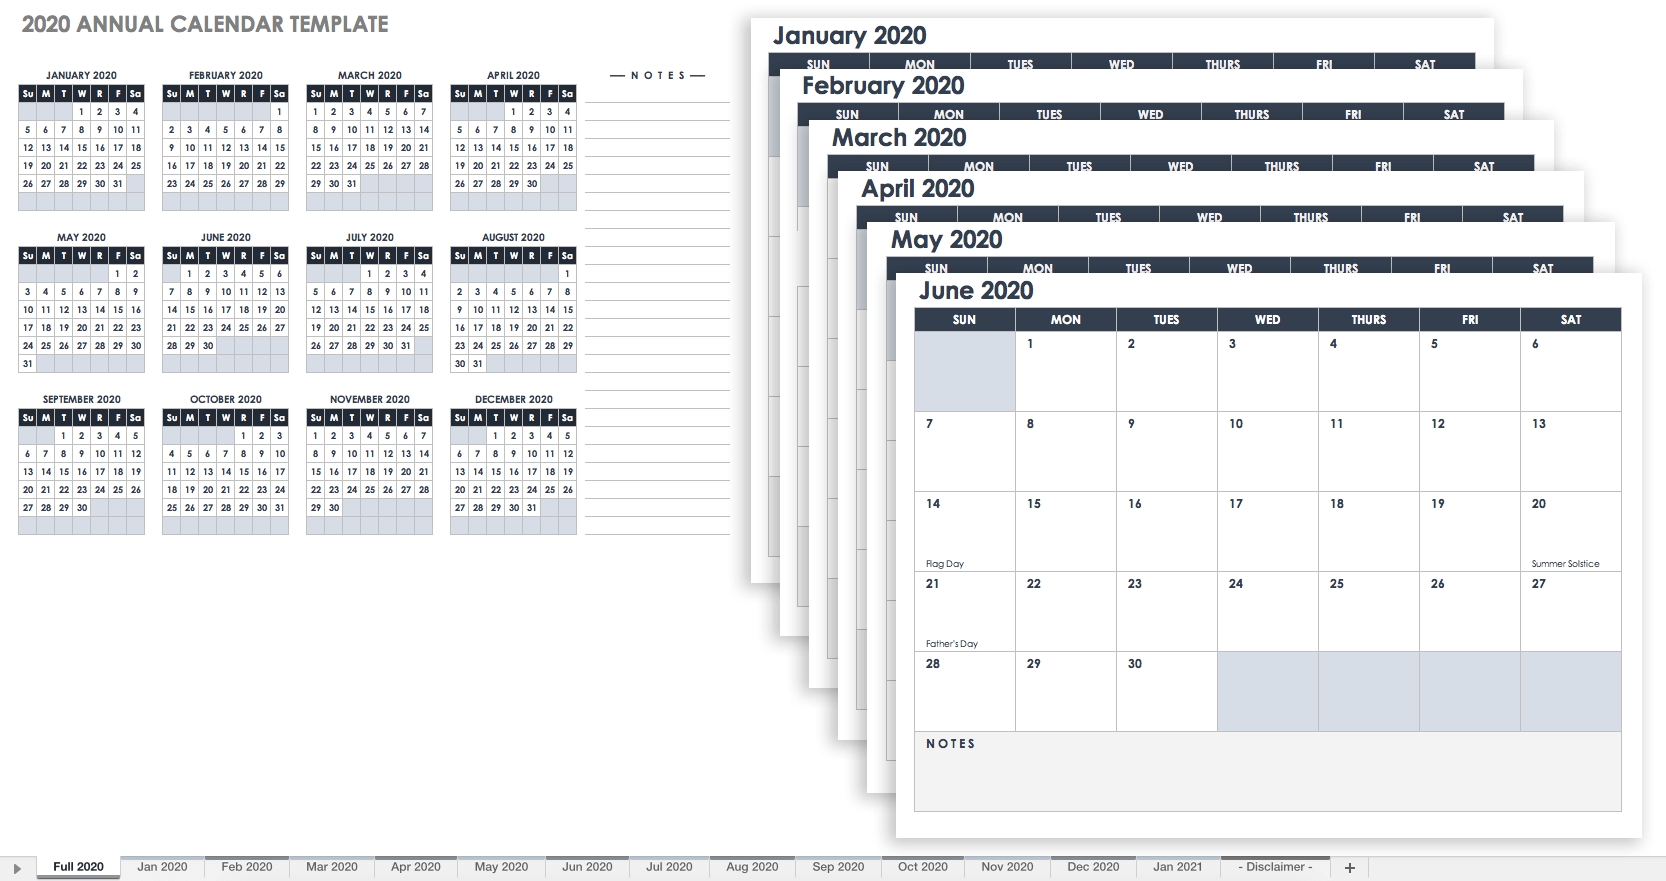 Free Blank Calendar Templates - Smartsheet-2020 Biweekly Pay Calendar Template